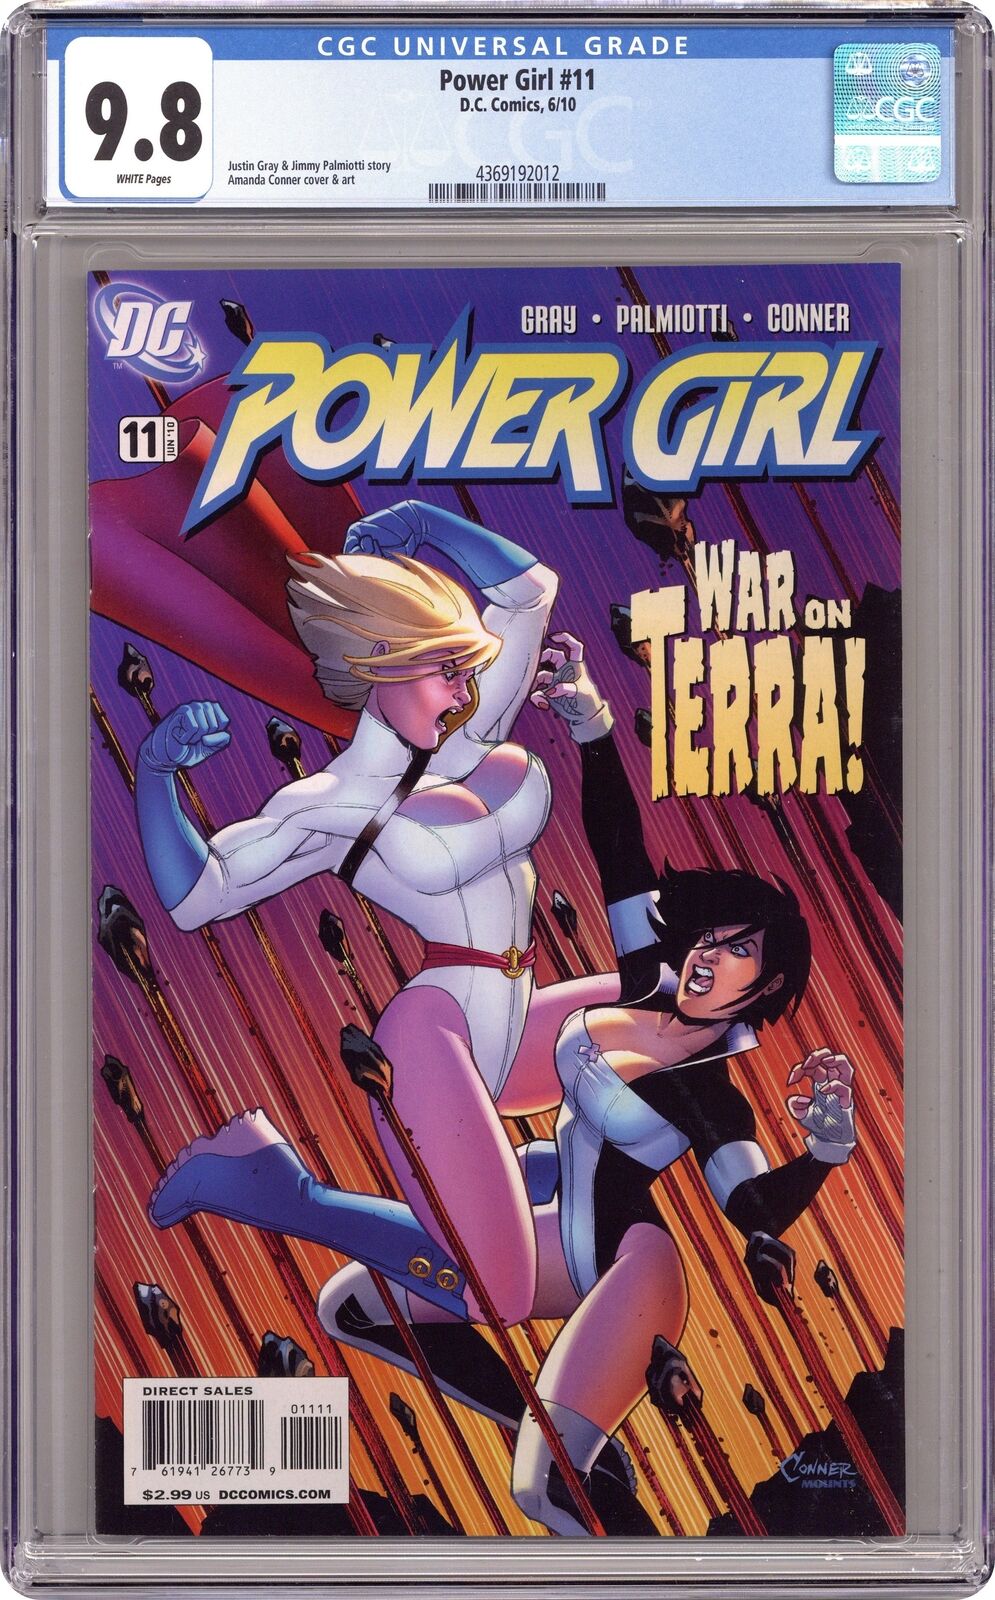 Power Girl #11 CGC 9.8 2010 4369192012